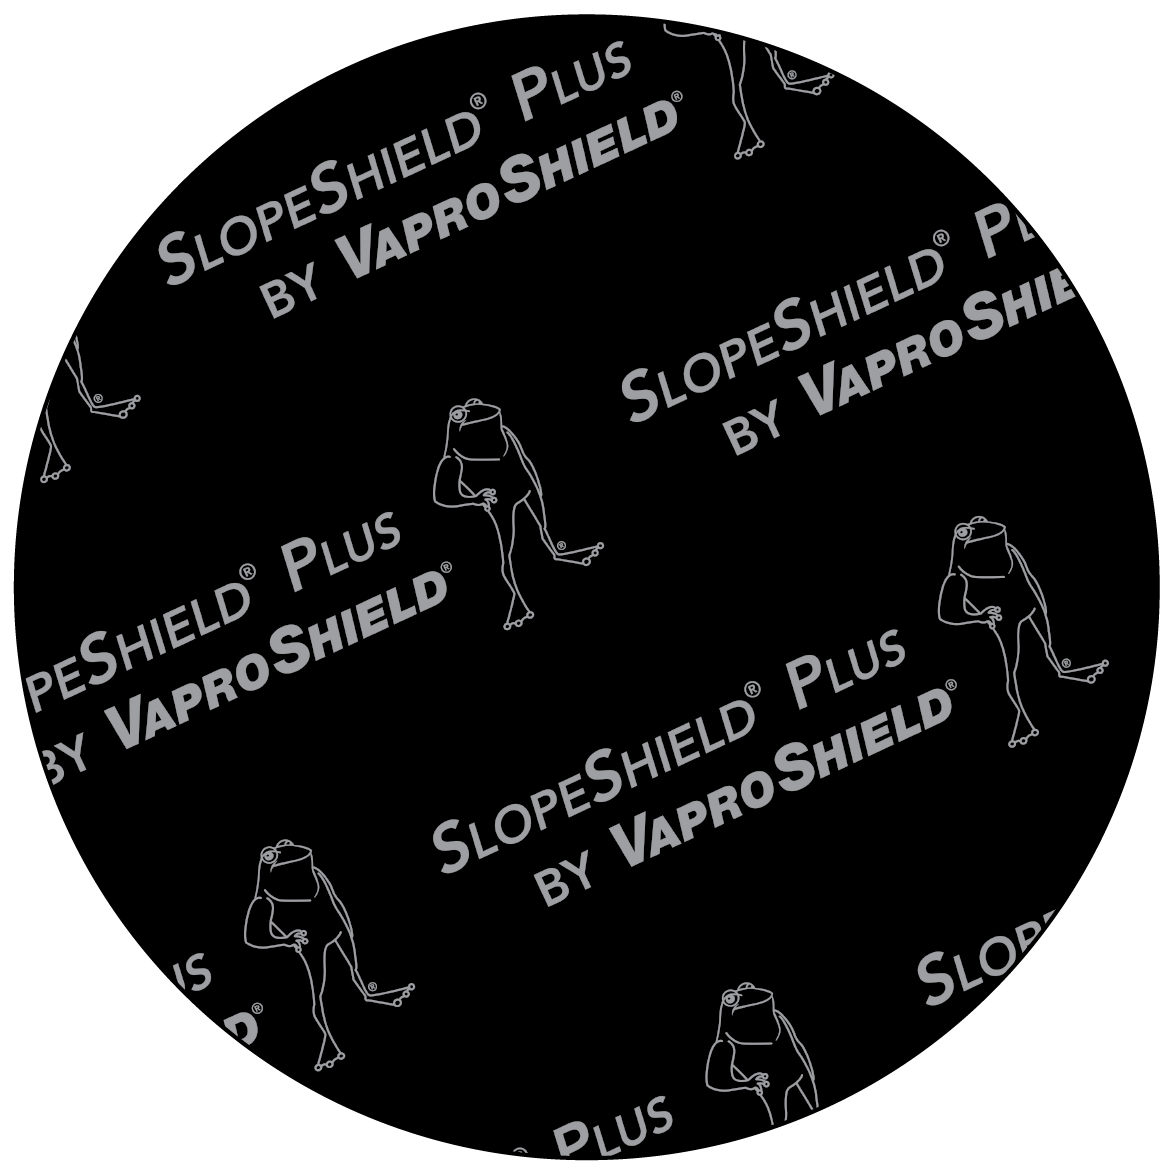 VaproShield Website ProductDots SlopeshieldPlusNoText